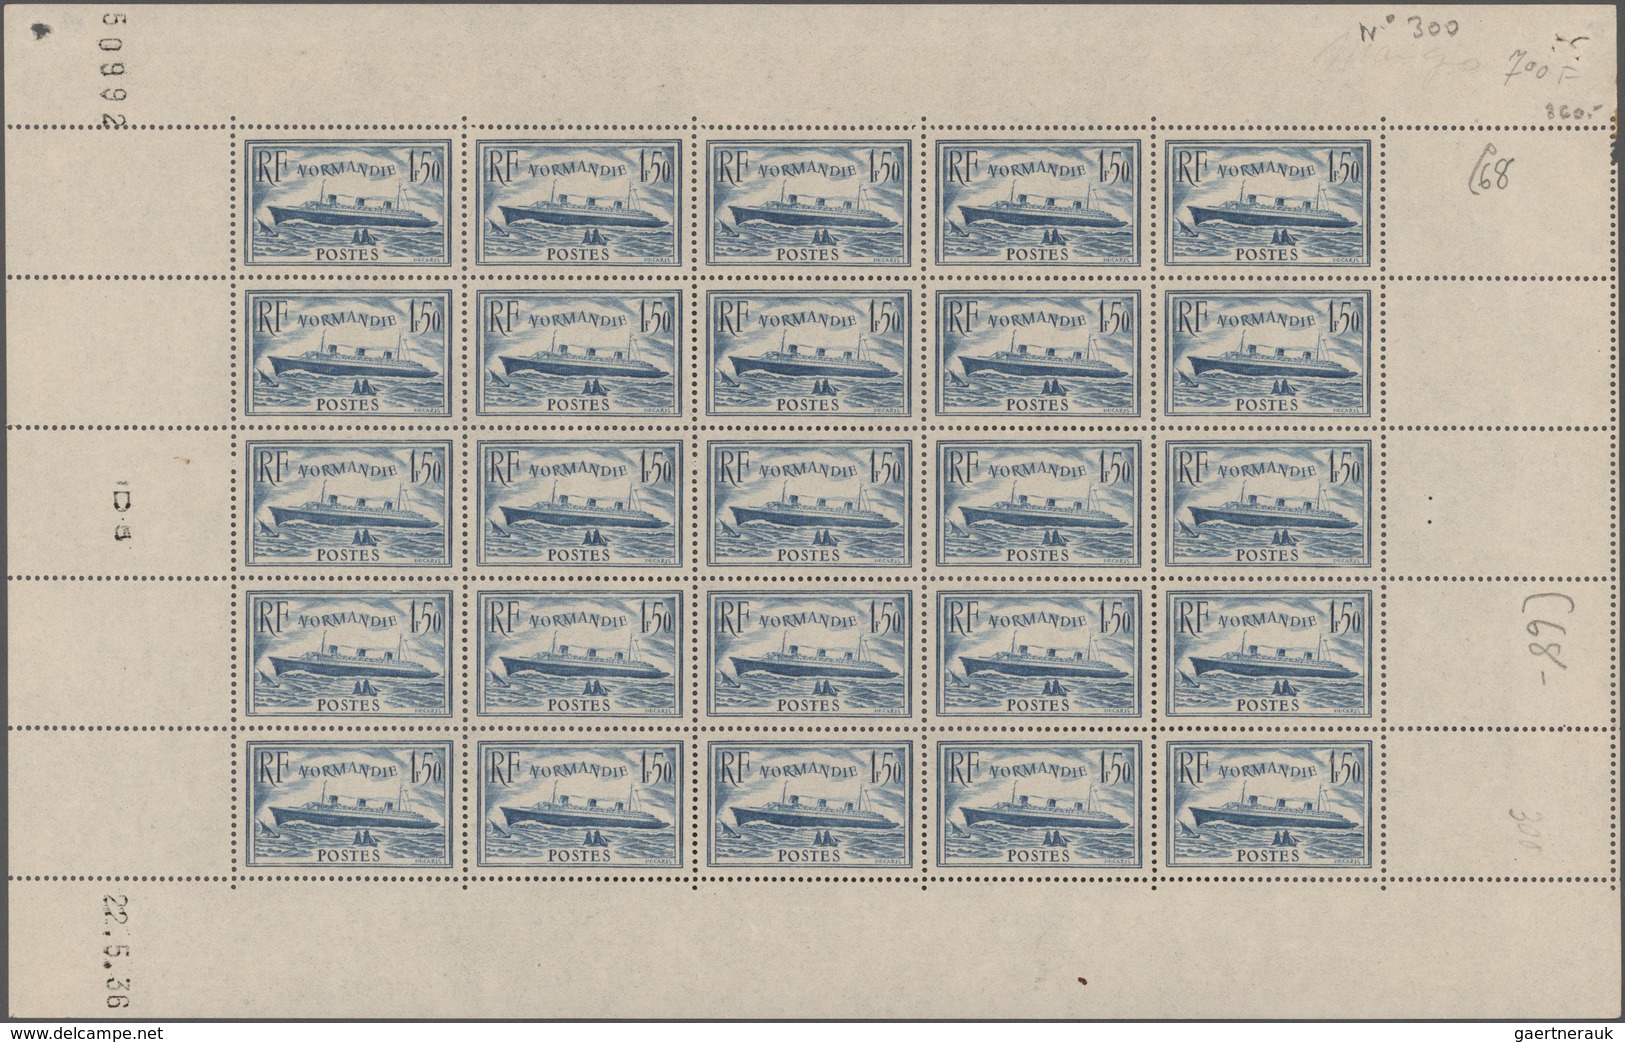 Frankreich: 1936, Steamer "Normandie" 1.50fr. Light Blue, Sheet Of 25 Stamps, Mint Never Hinged (sli - Sammlungen